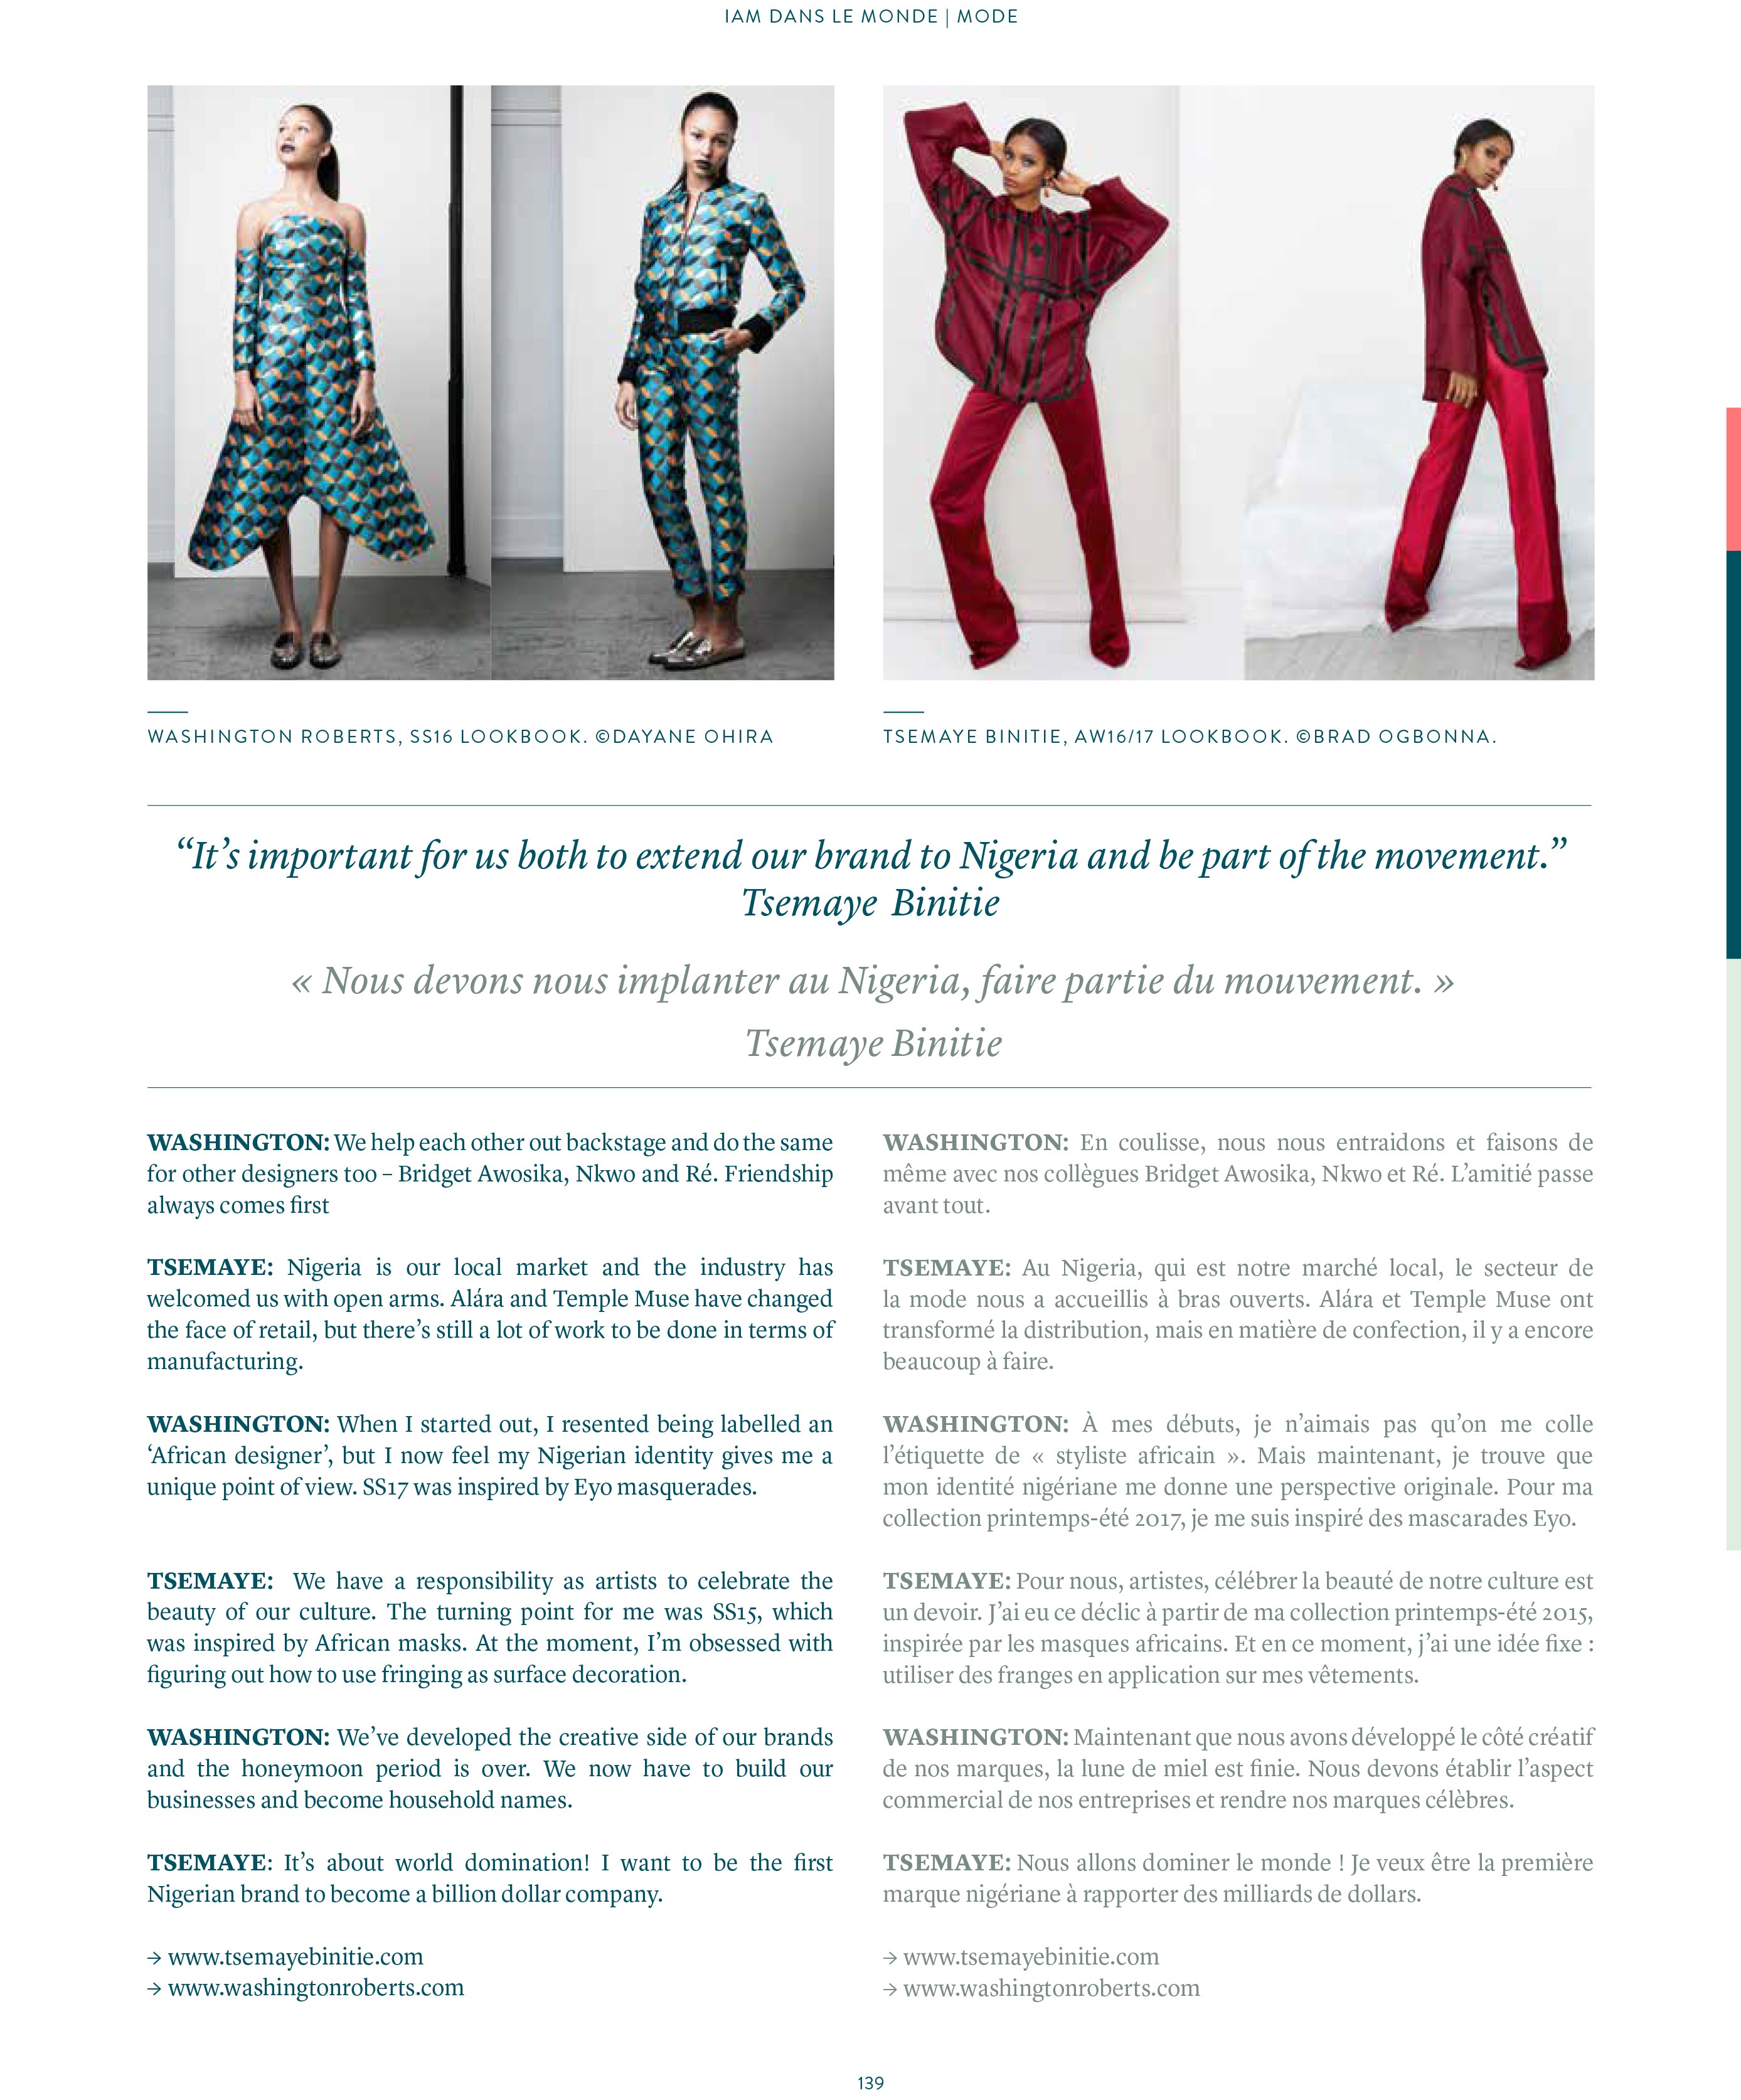 Washington Roberts Tsemaye Binitie on IAM in the world fashion by Helen Jennings